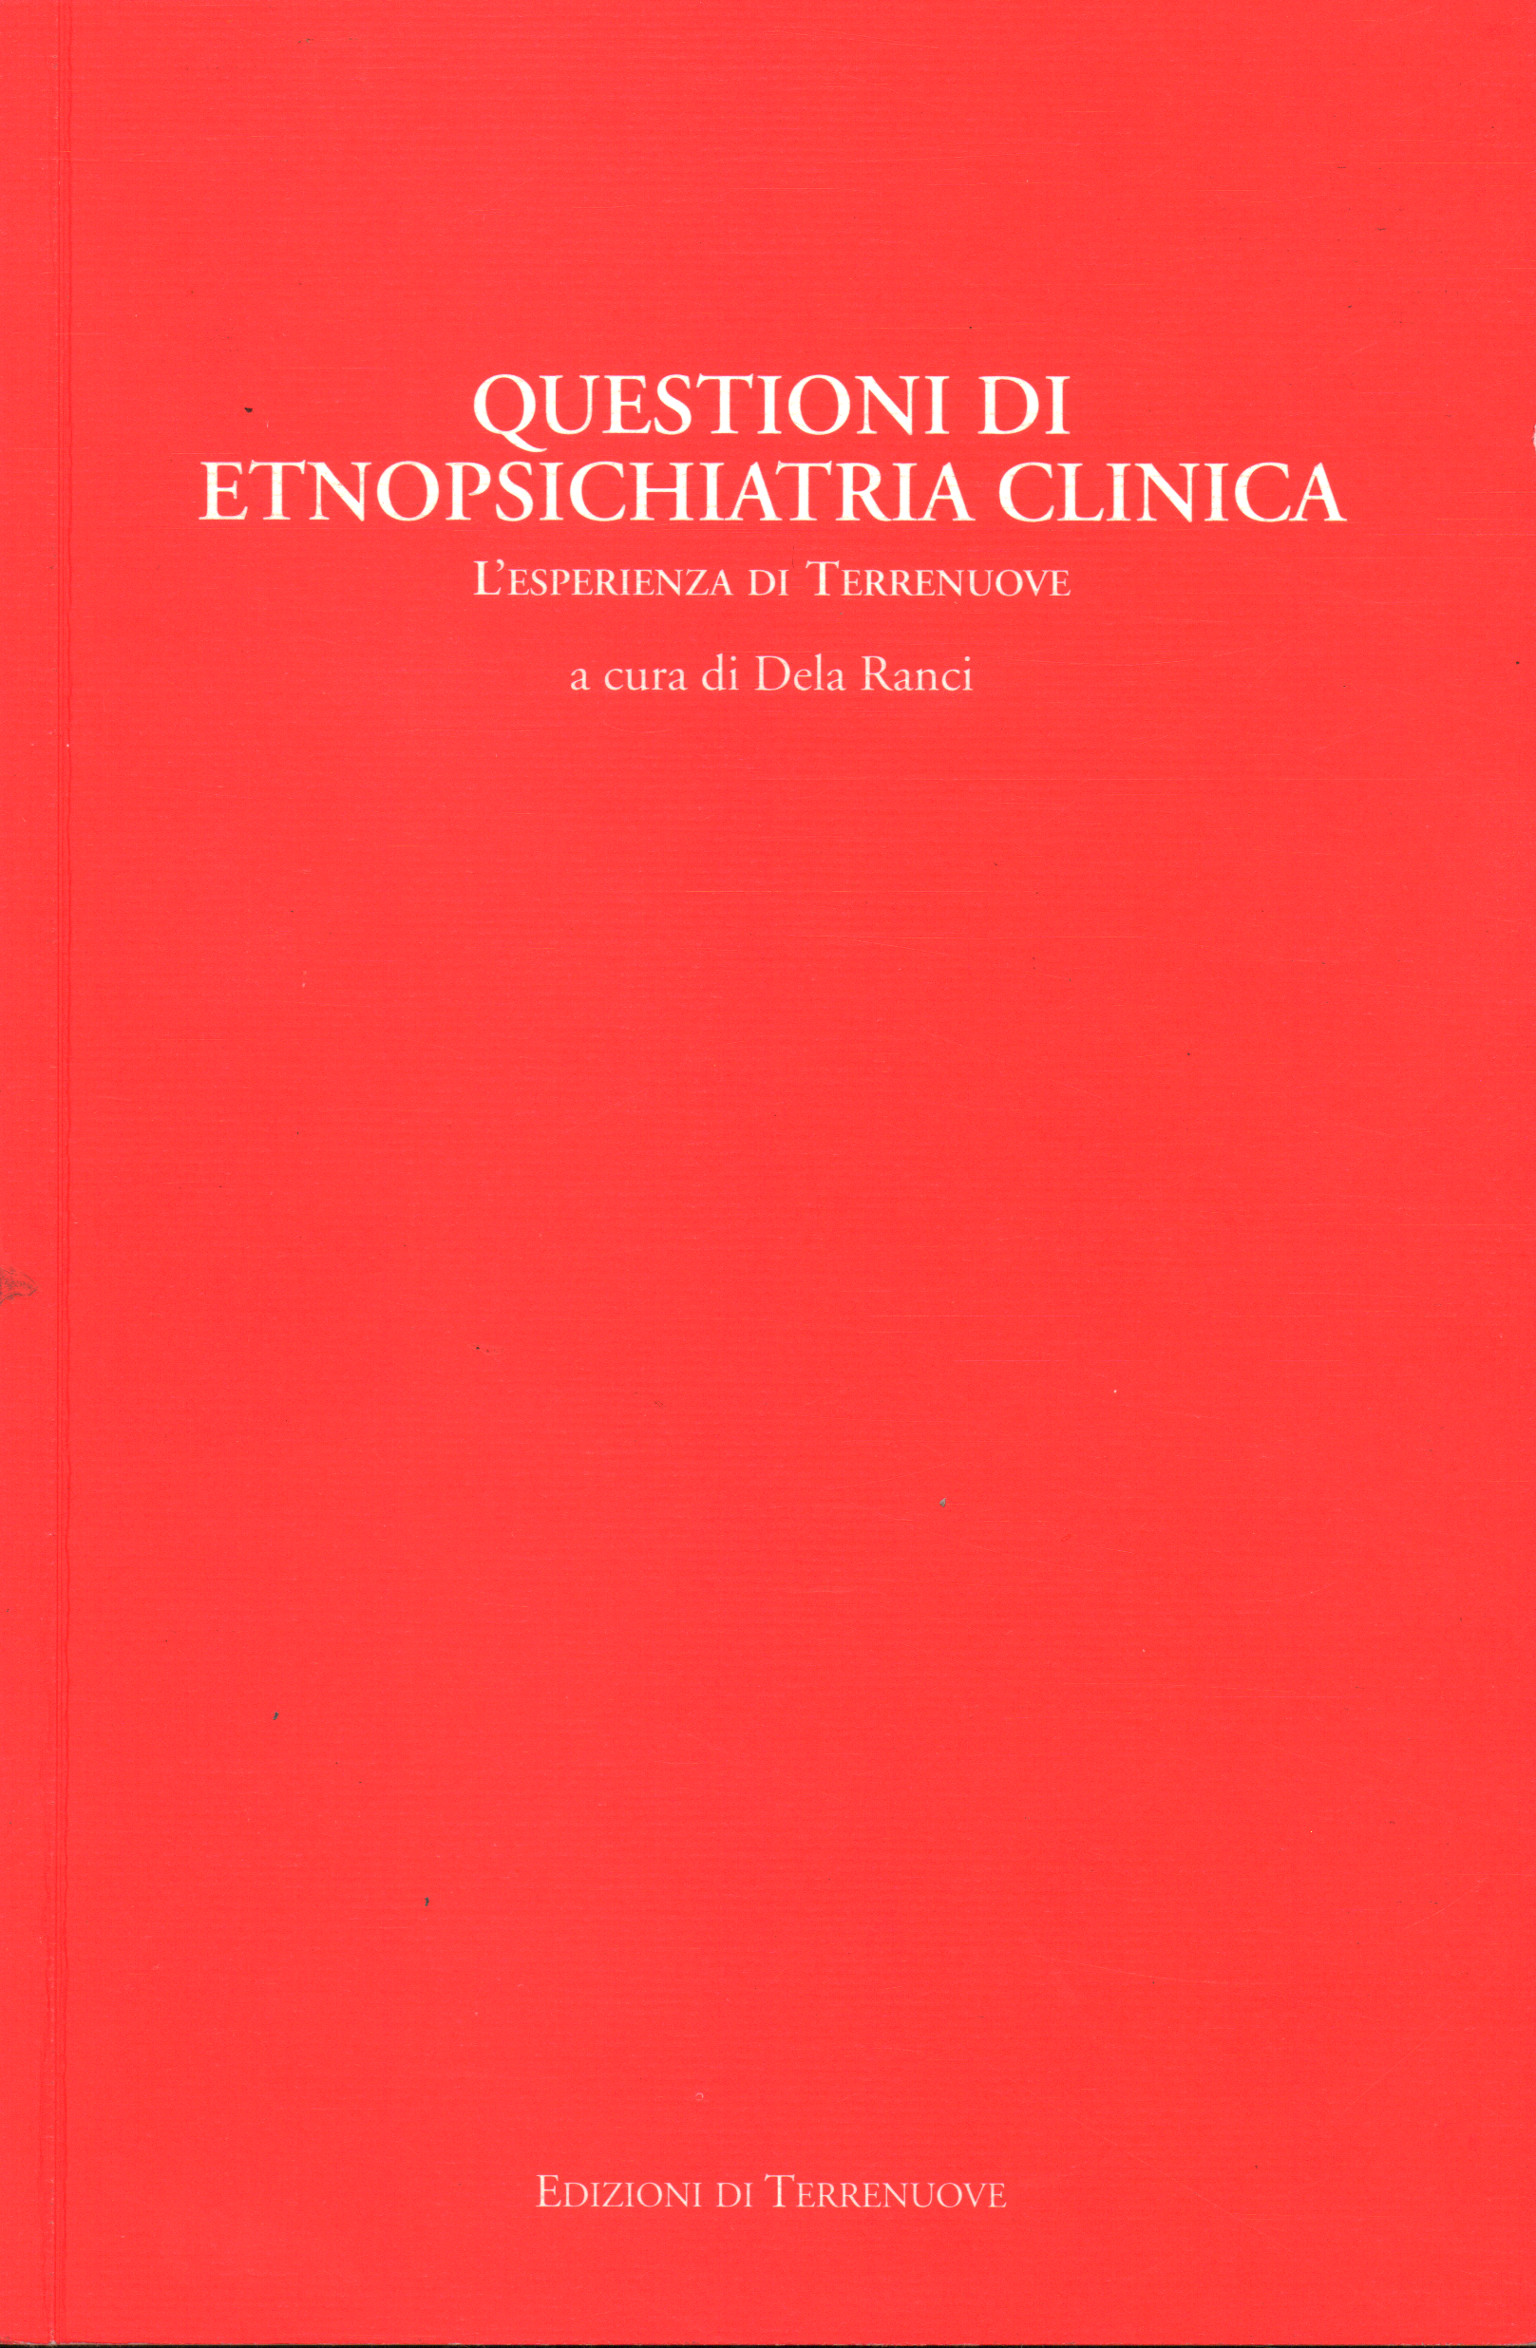 Matters of Clinical Ethnopsychiatry, Dela Ranci